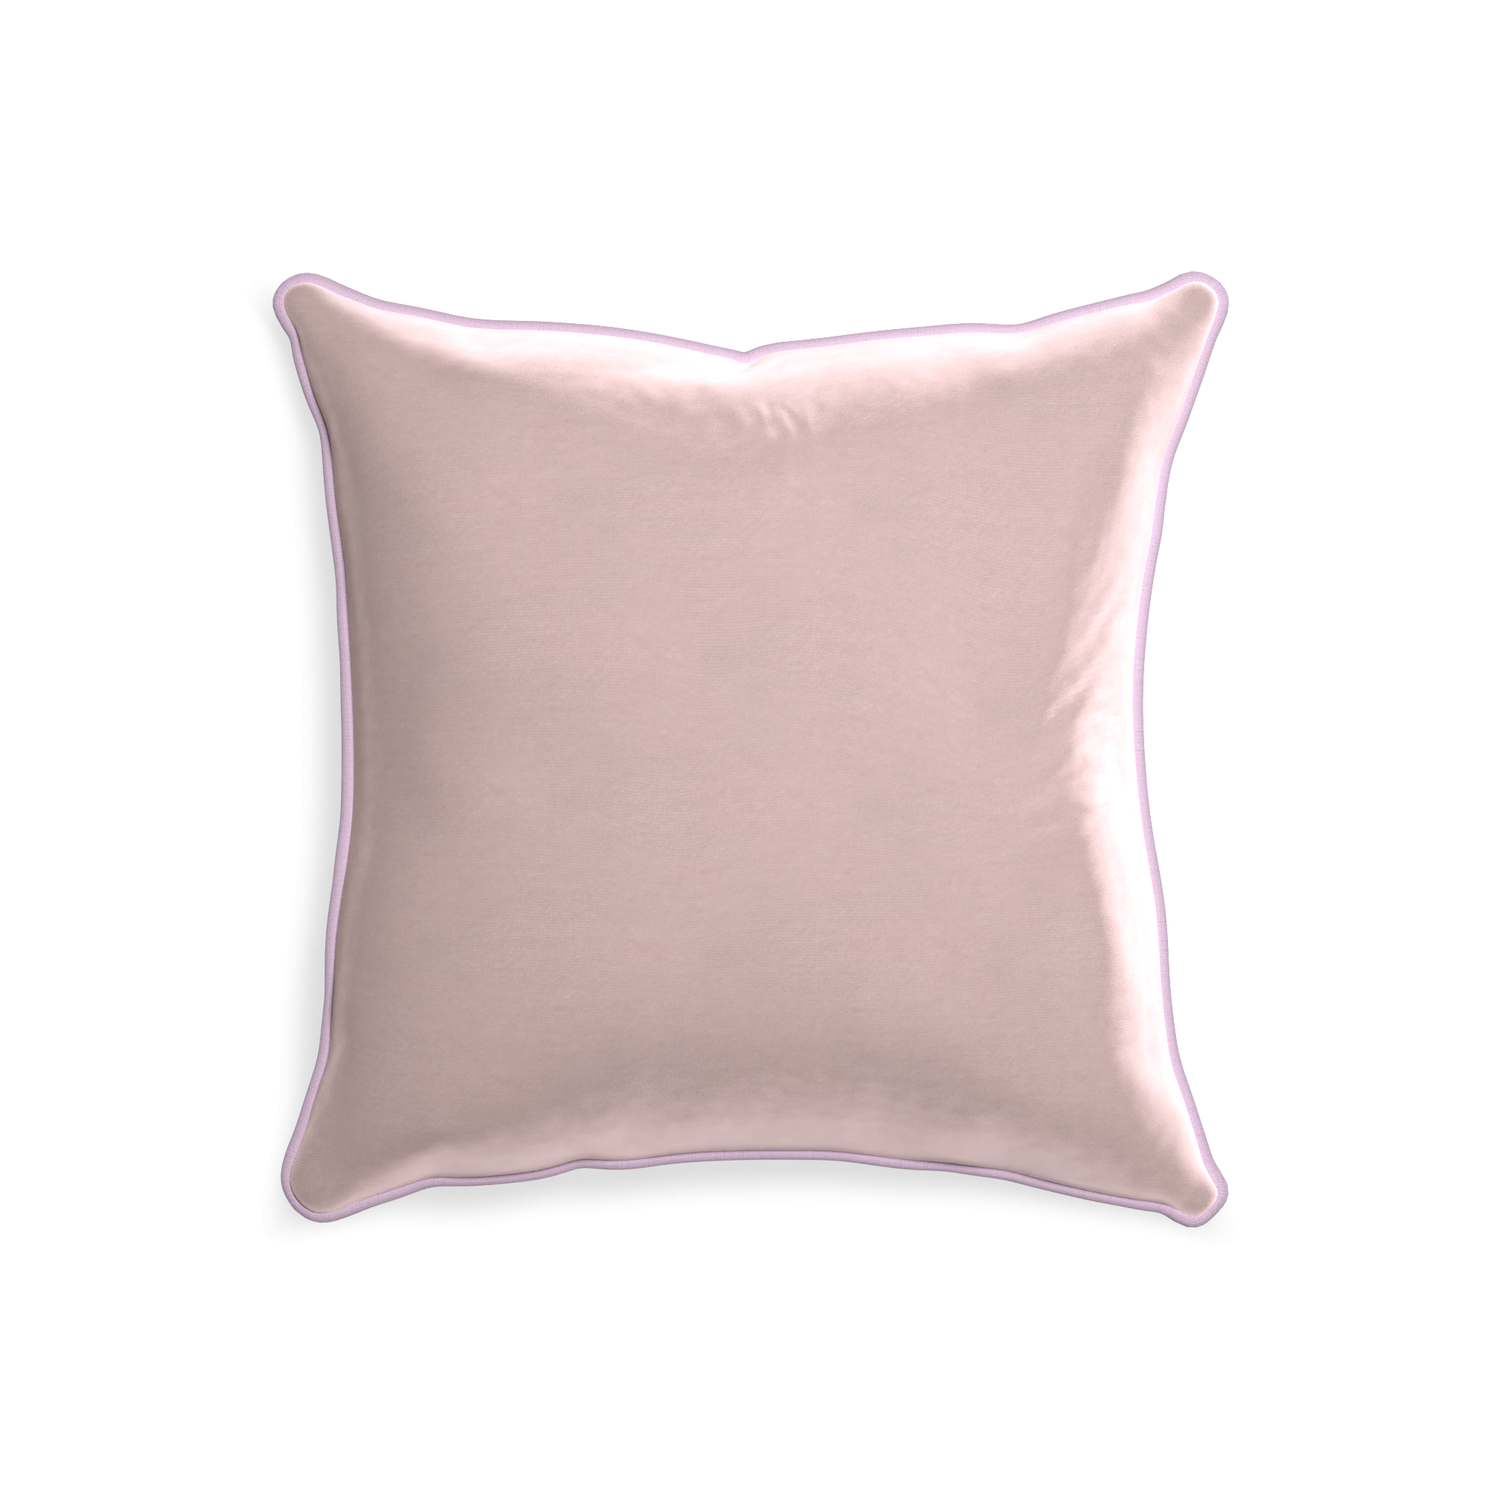 20-square rose velvet custom pillow with l piping on white background